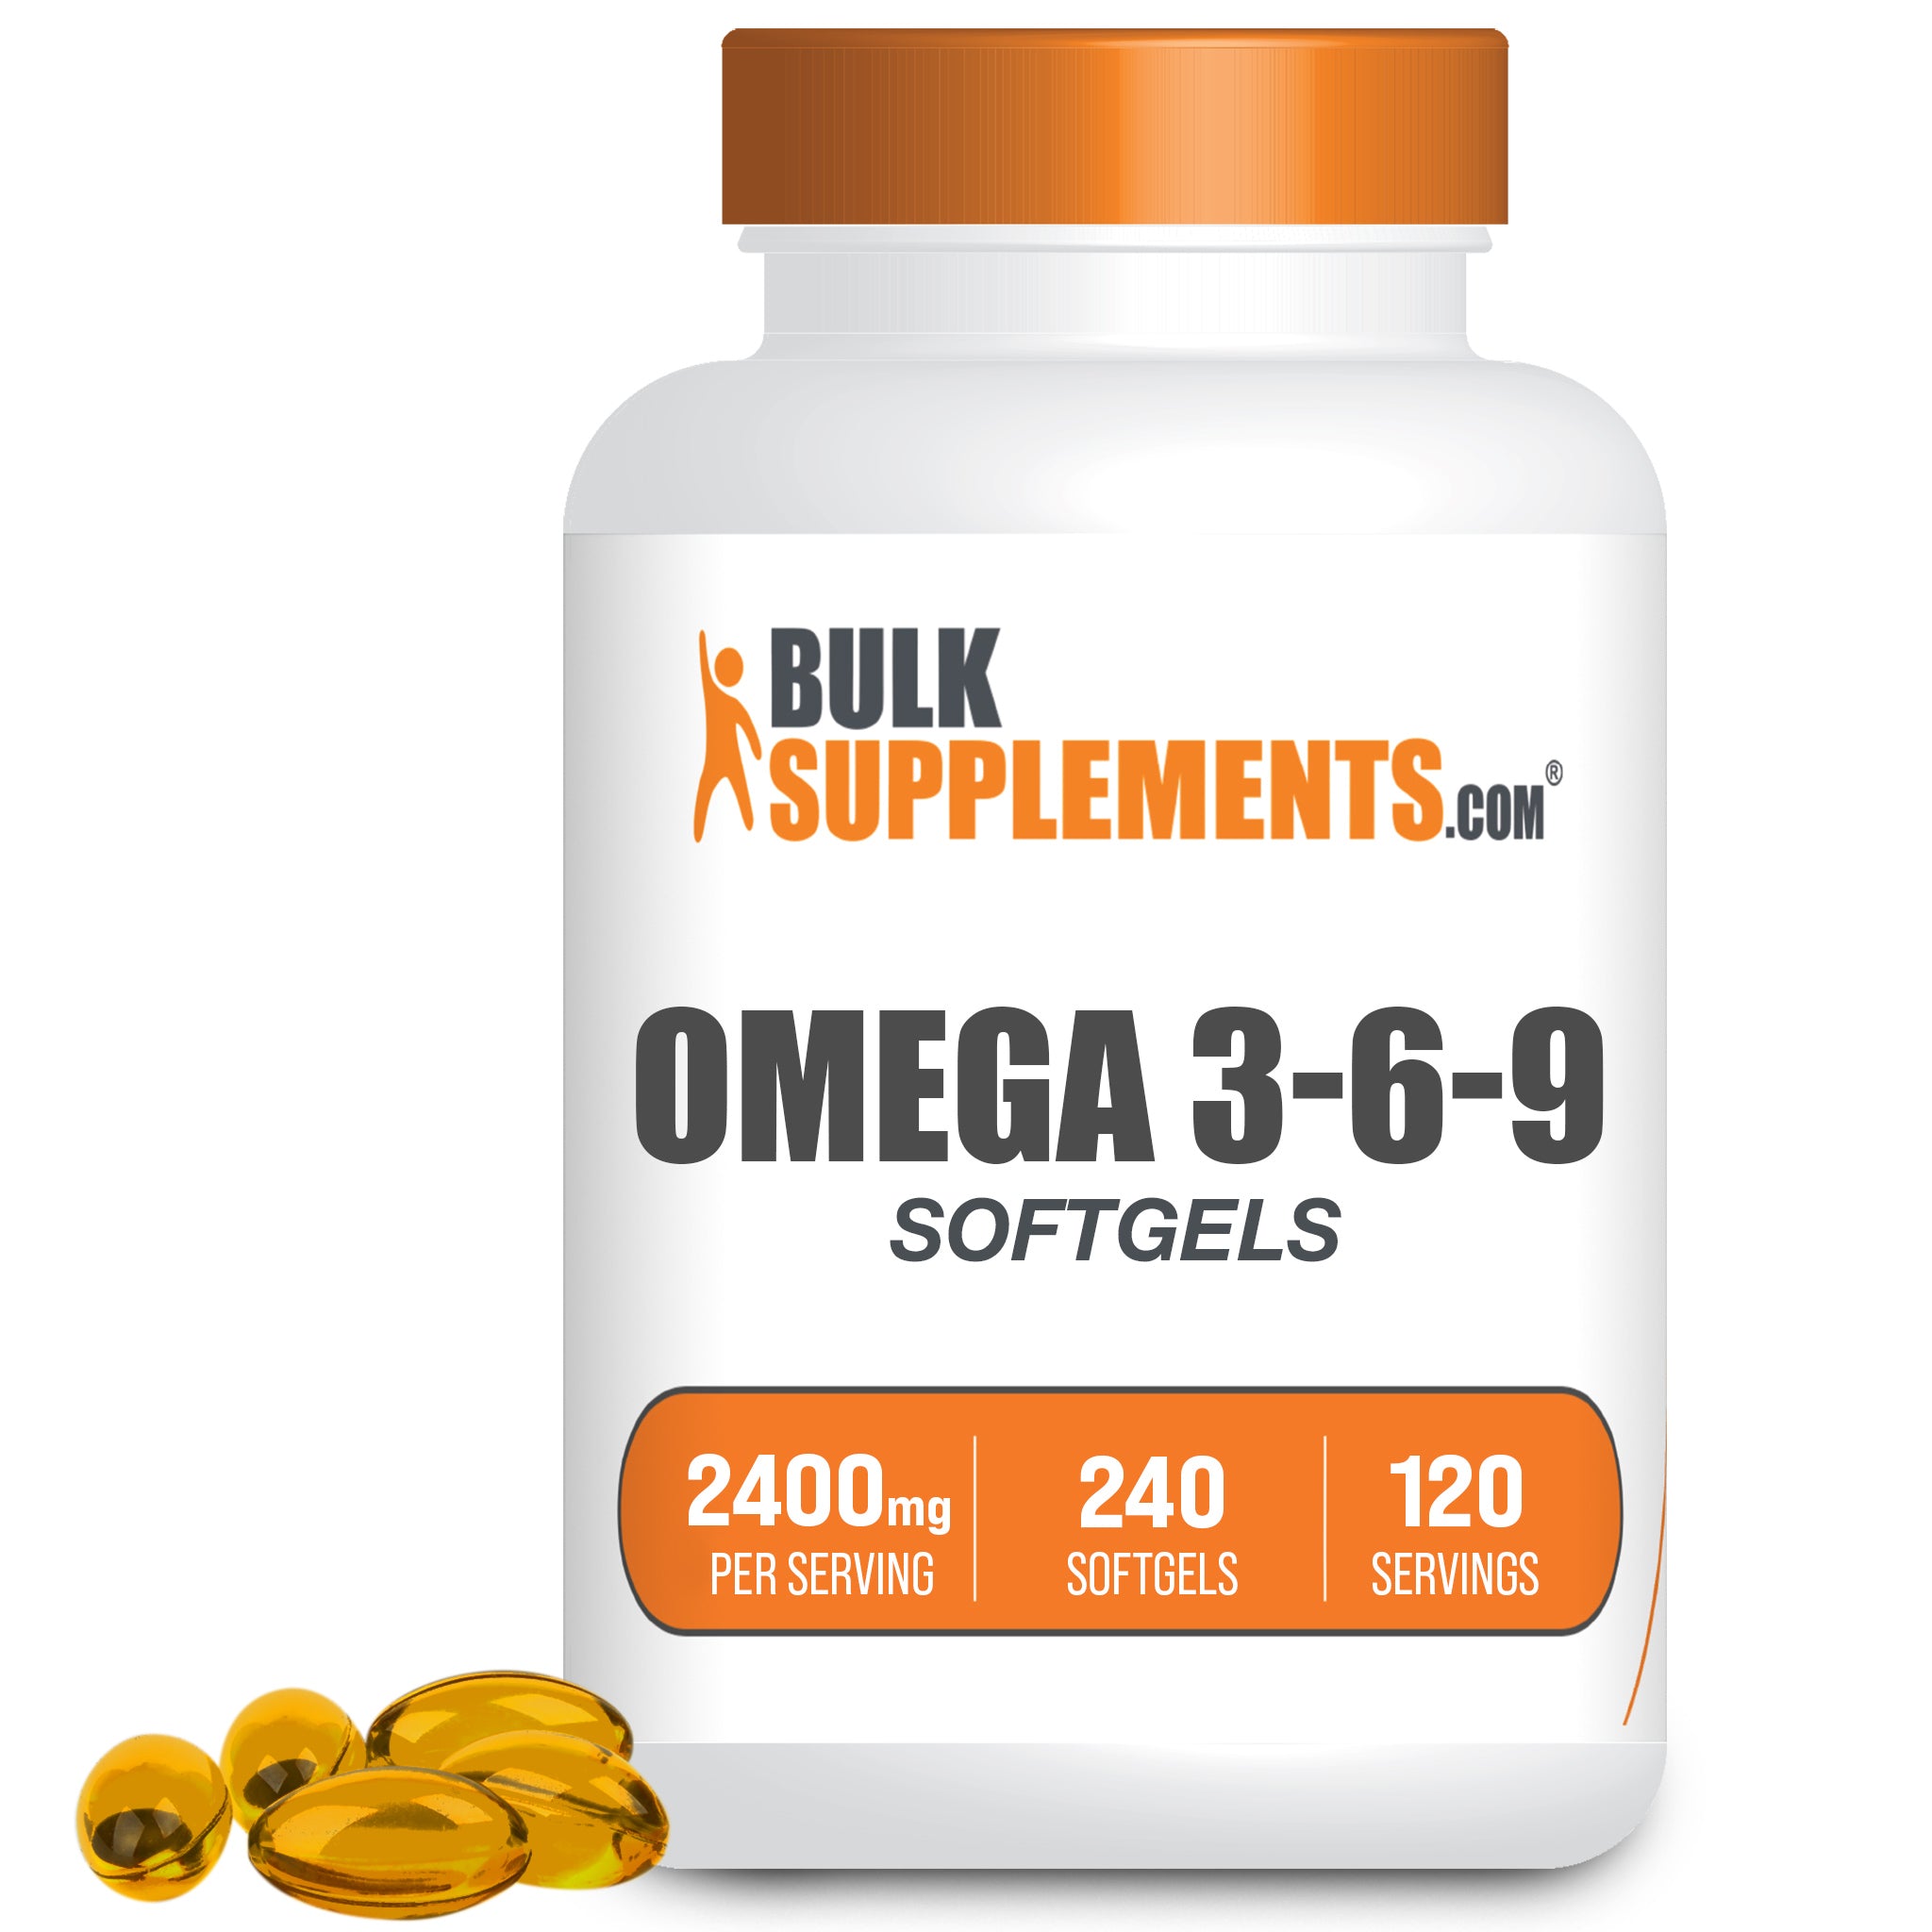 Omega 6 9 Supplements (Softgels) | Fatty